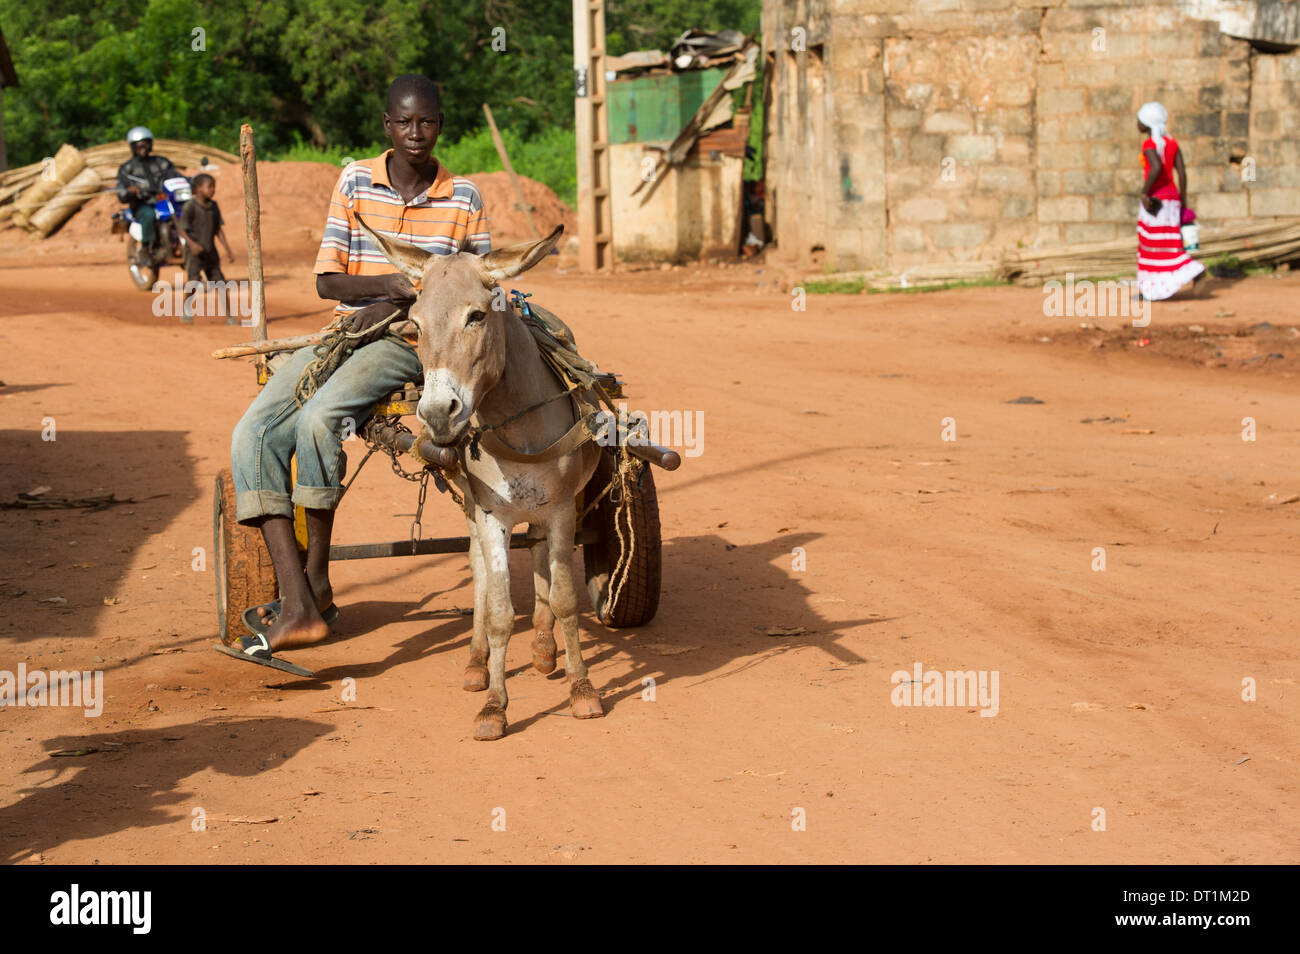 Donkey cart, Basse Santa Su, the Gambia Stock Photo